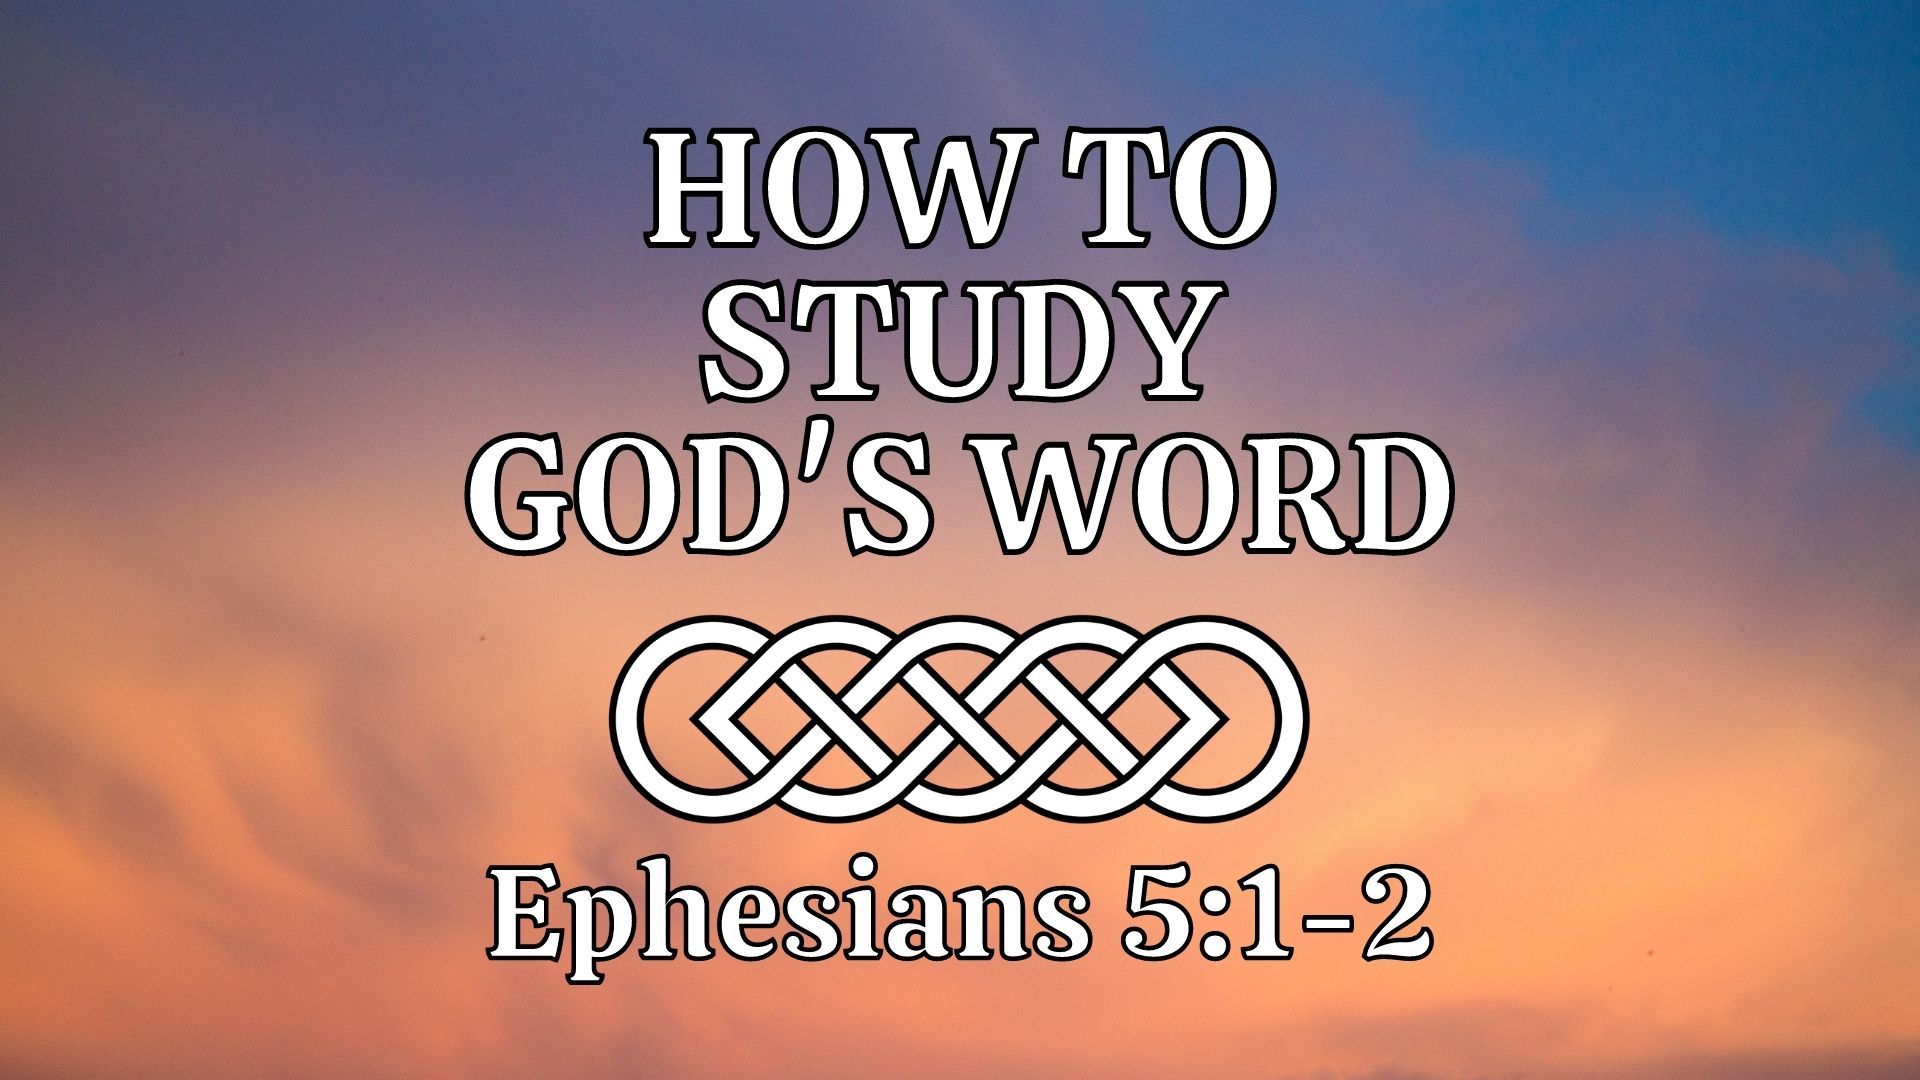 How to Study God's Word (Ephesians 5:1-2) Image